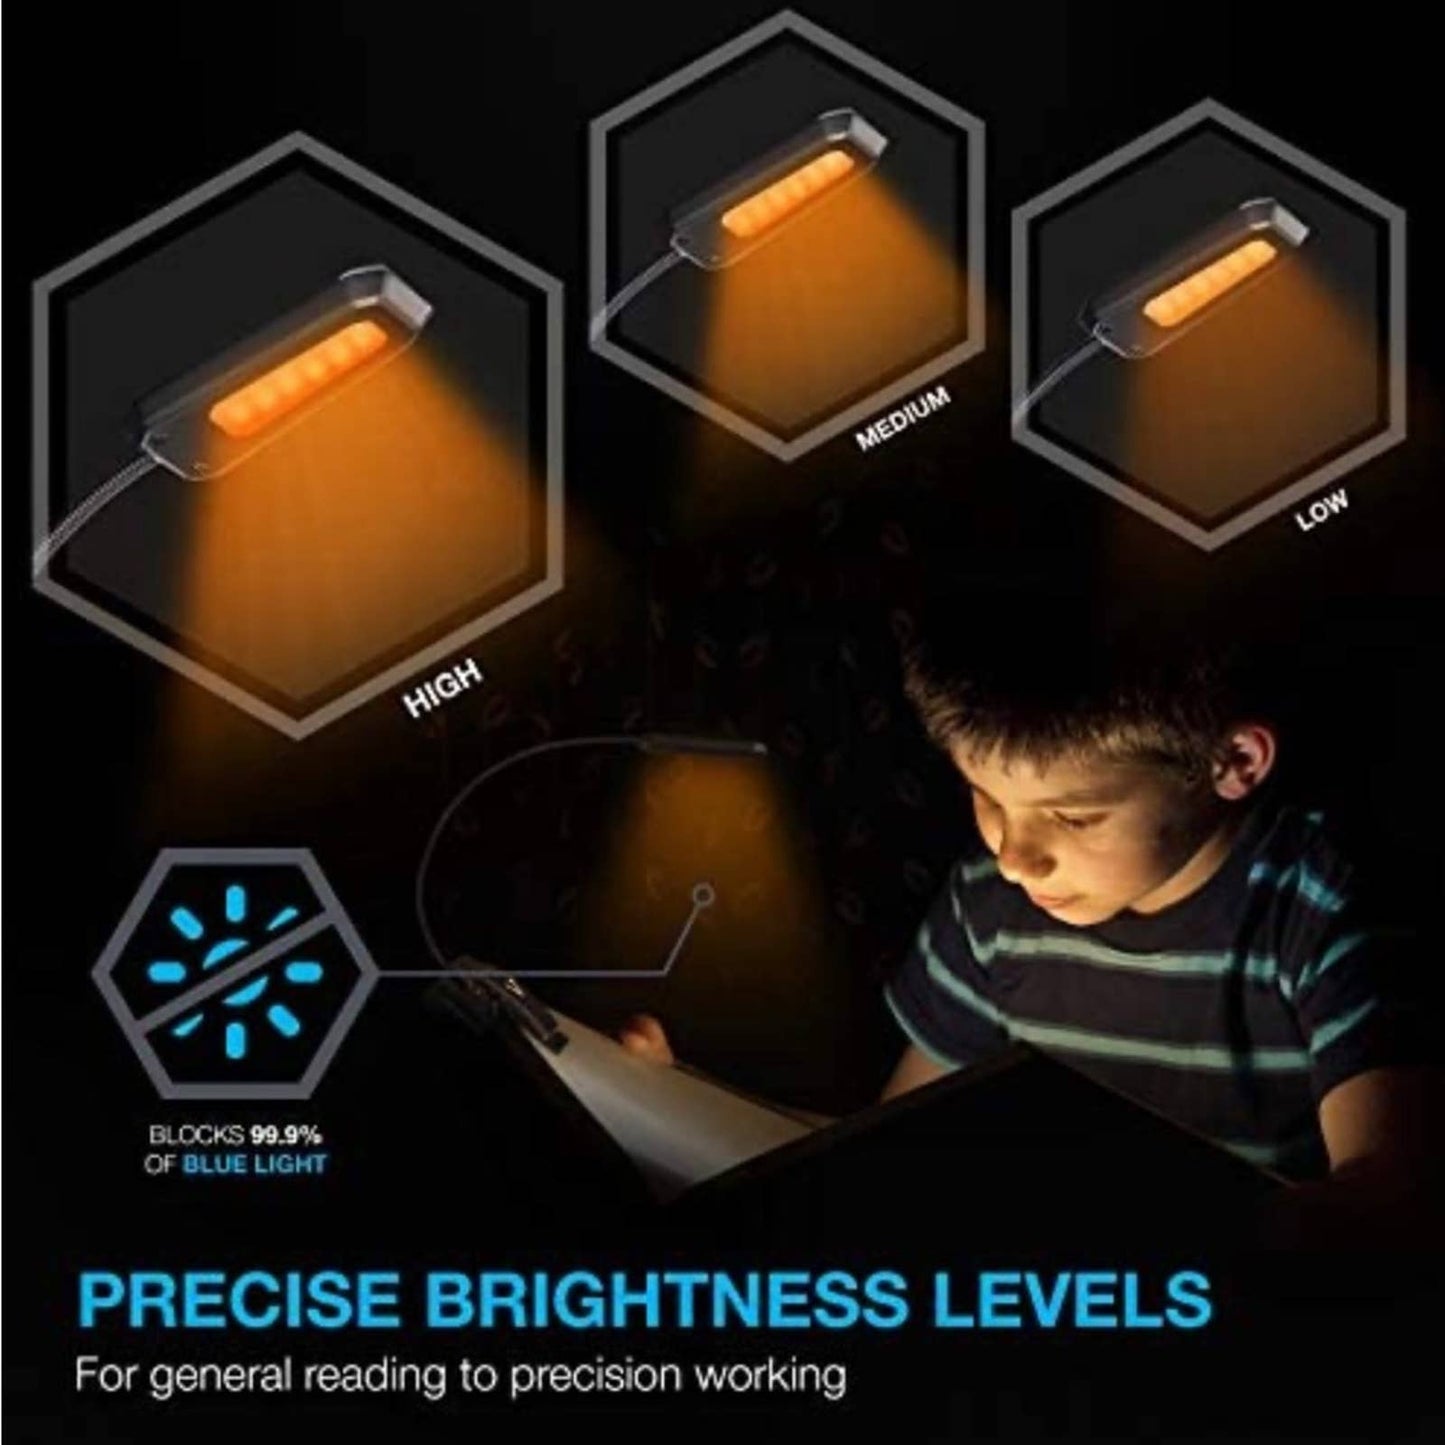 Book Light Pro, Rechargeable Reading Light, Book Light Warm Amber Light